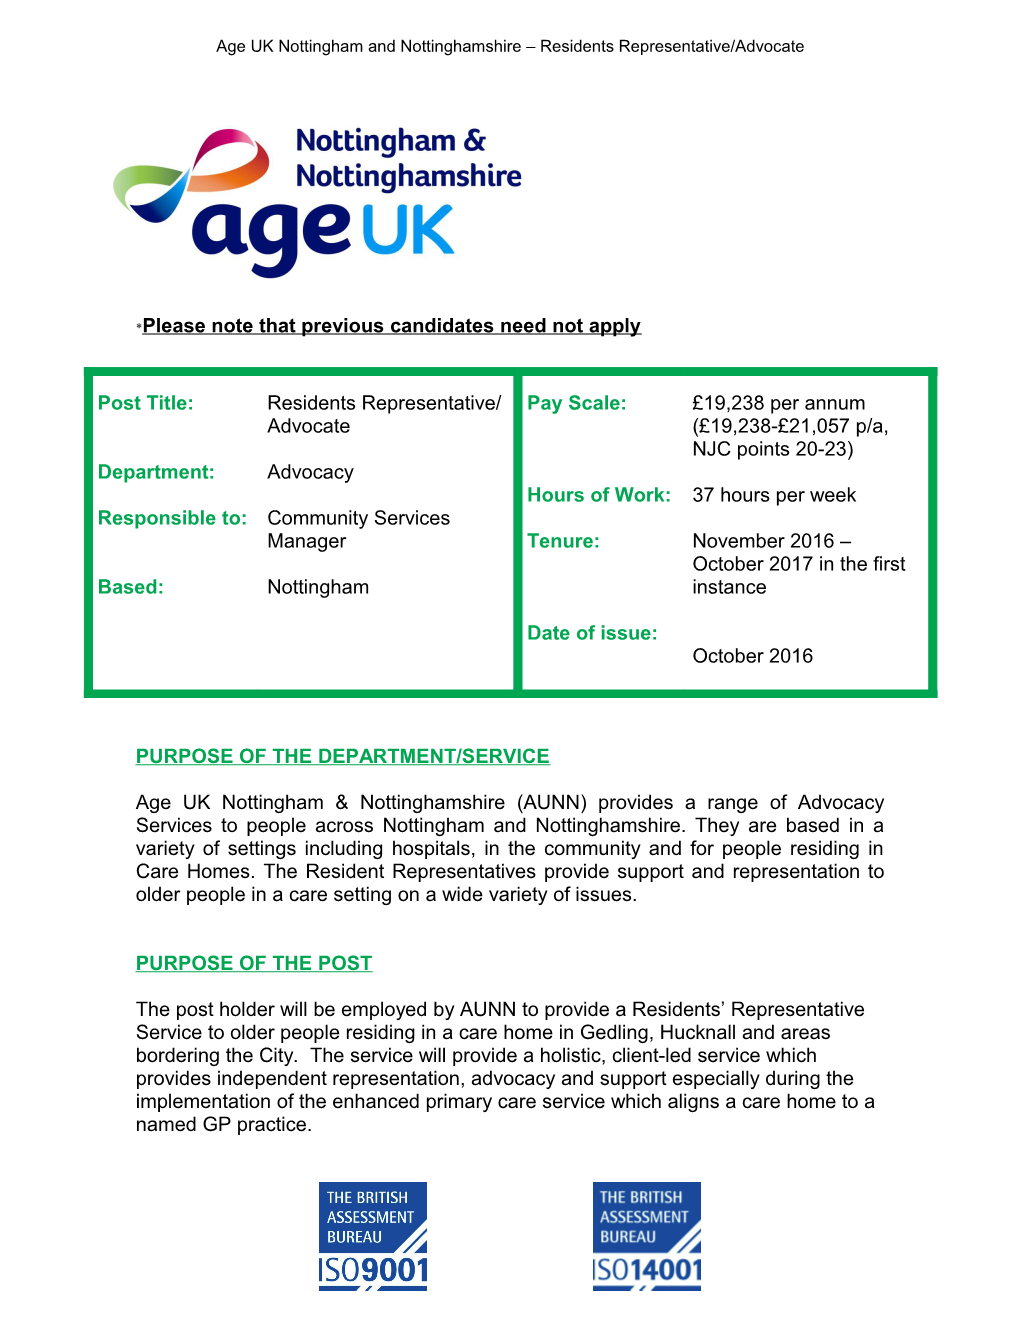 Age UK Nottingham and Nottinghamshire Residents Representative/Advocate